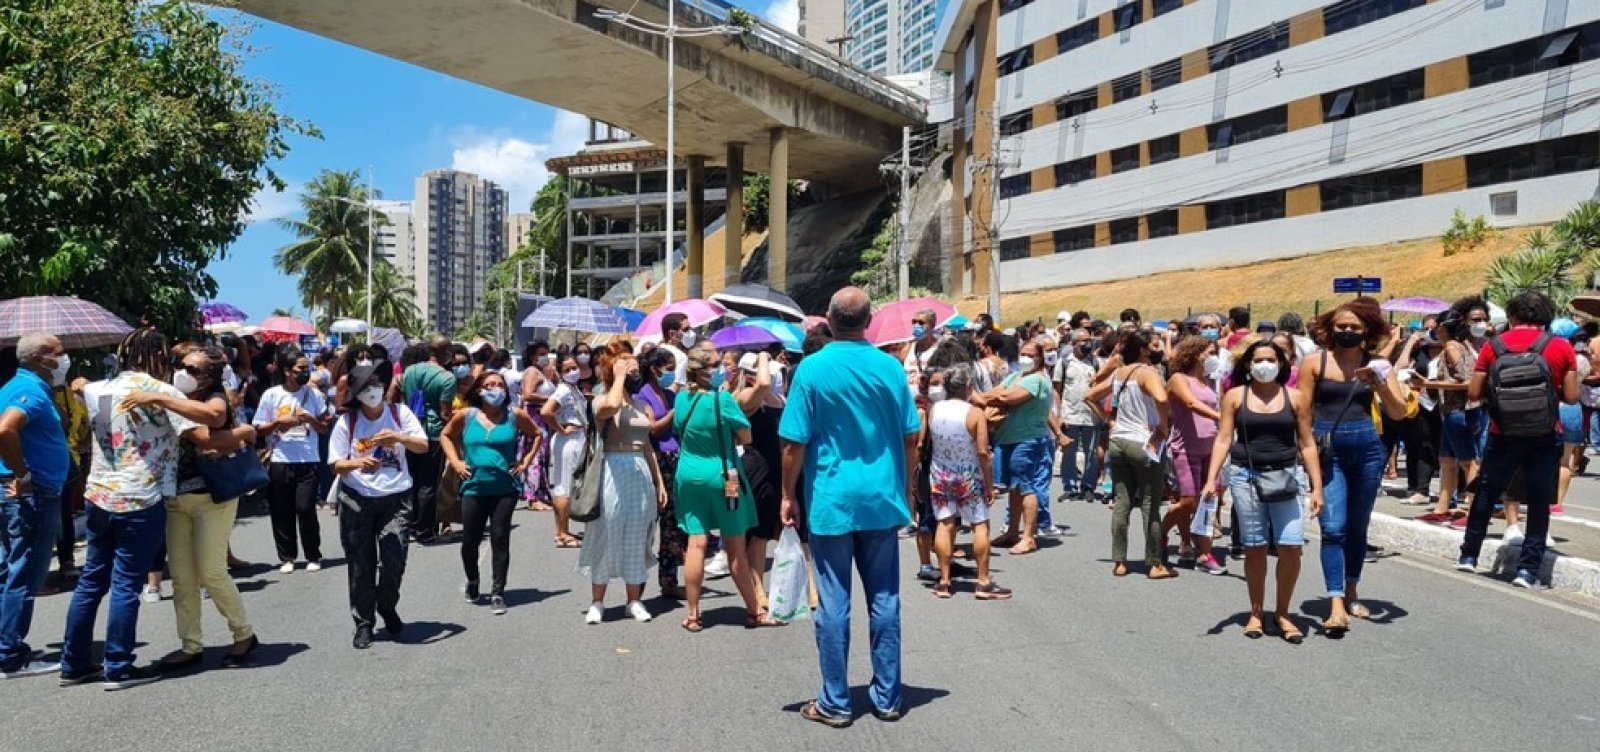 Contra reforma no ensino municipal, professores organizam protesto na Boca do Rio